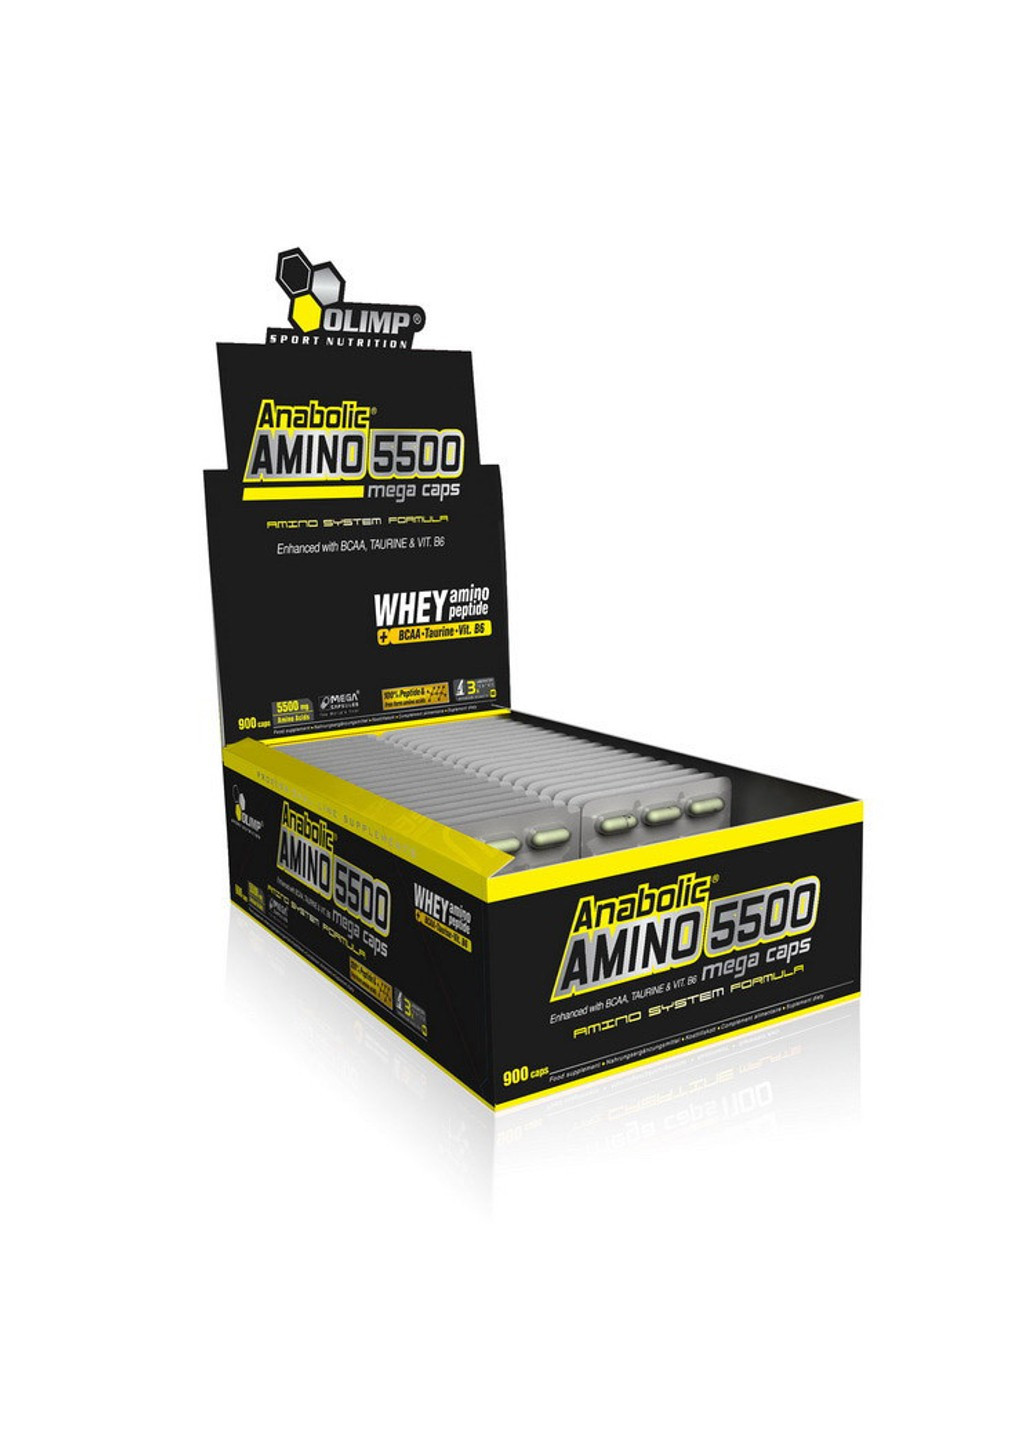 Комплекс аминокислот Anabolic Amino 5500 (30 капс) олимп анаболик амино Olimp (255362483)